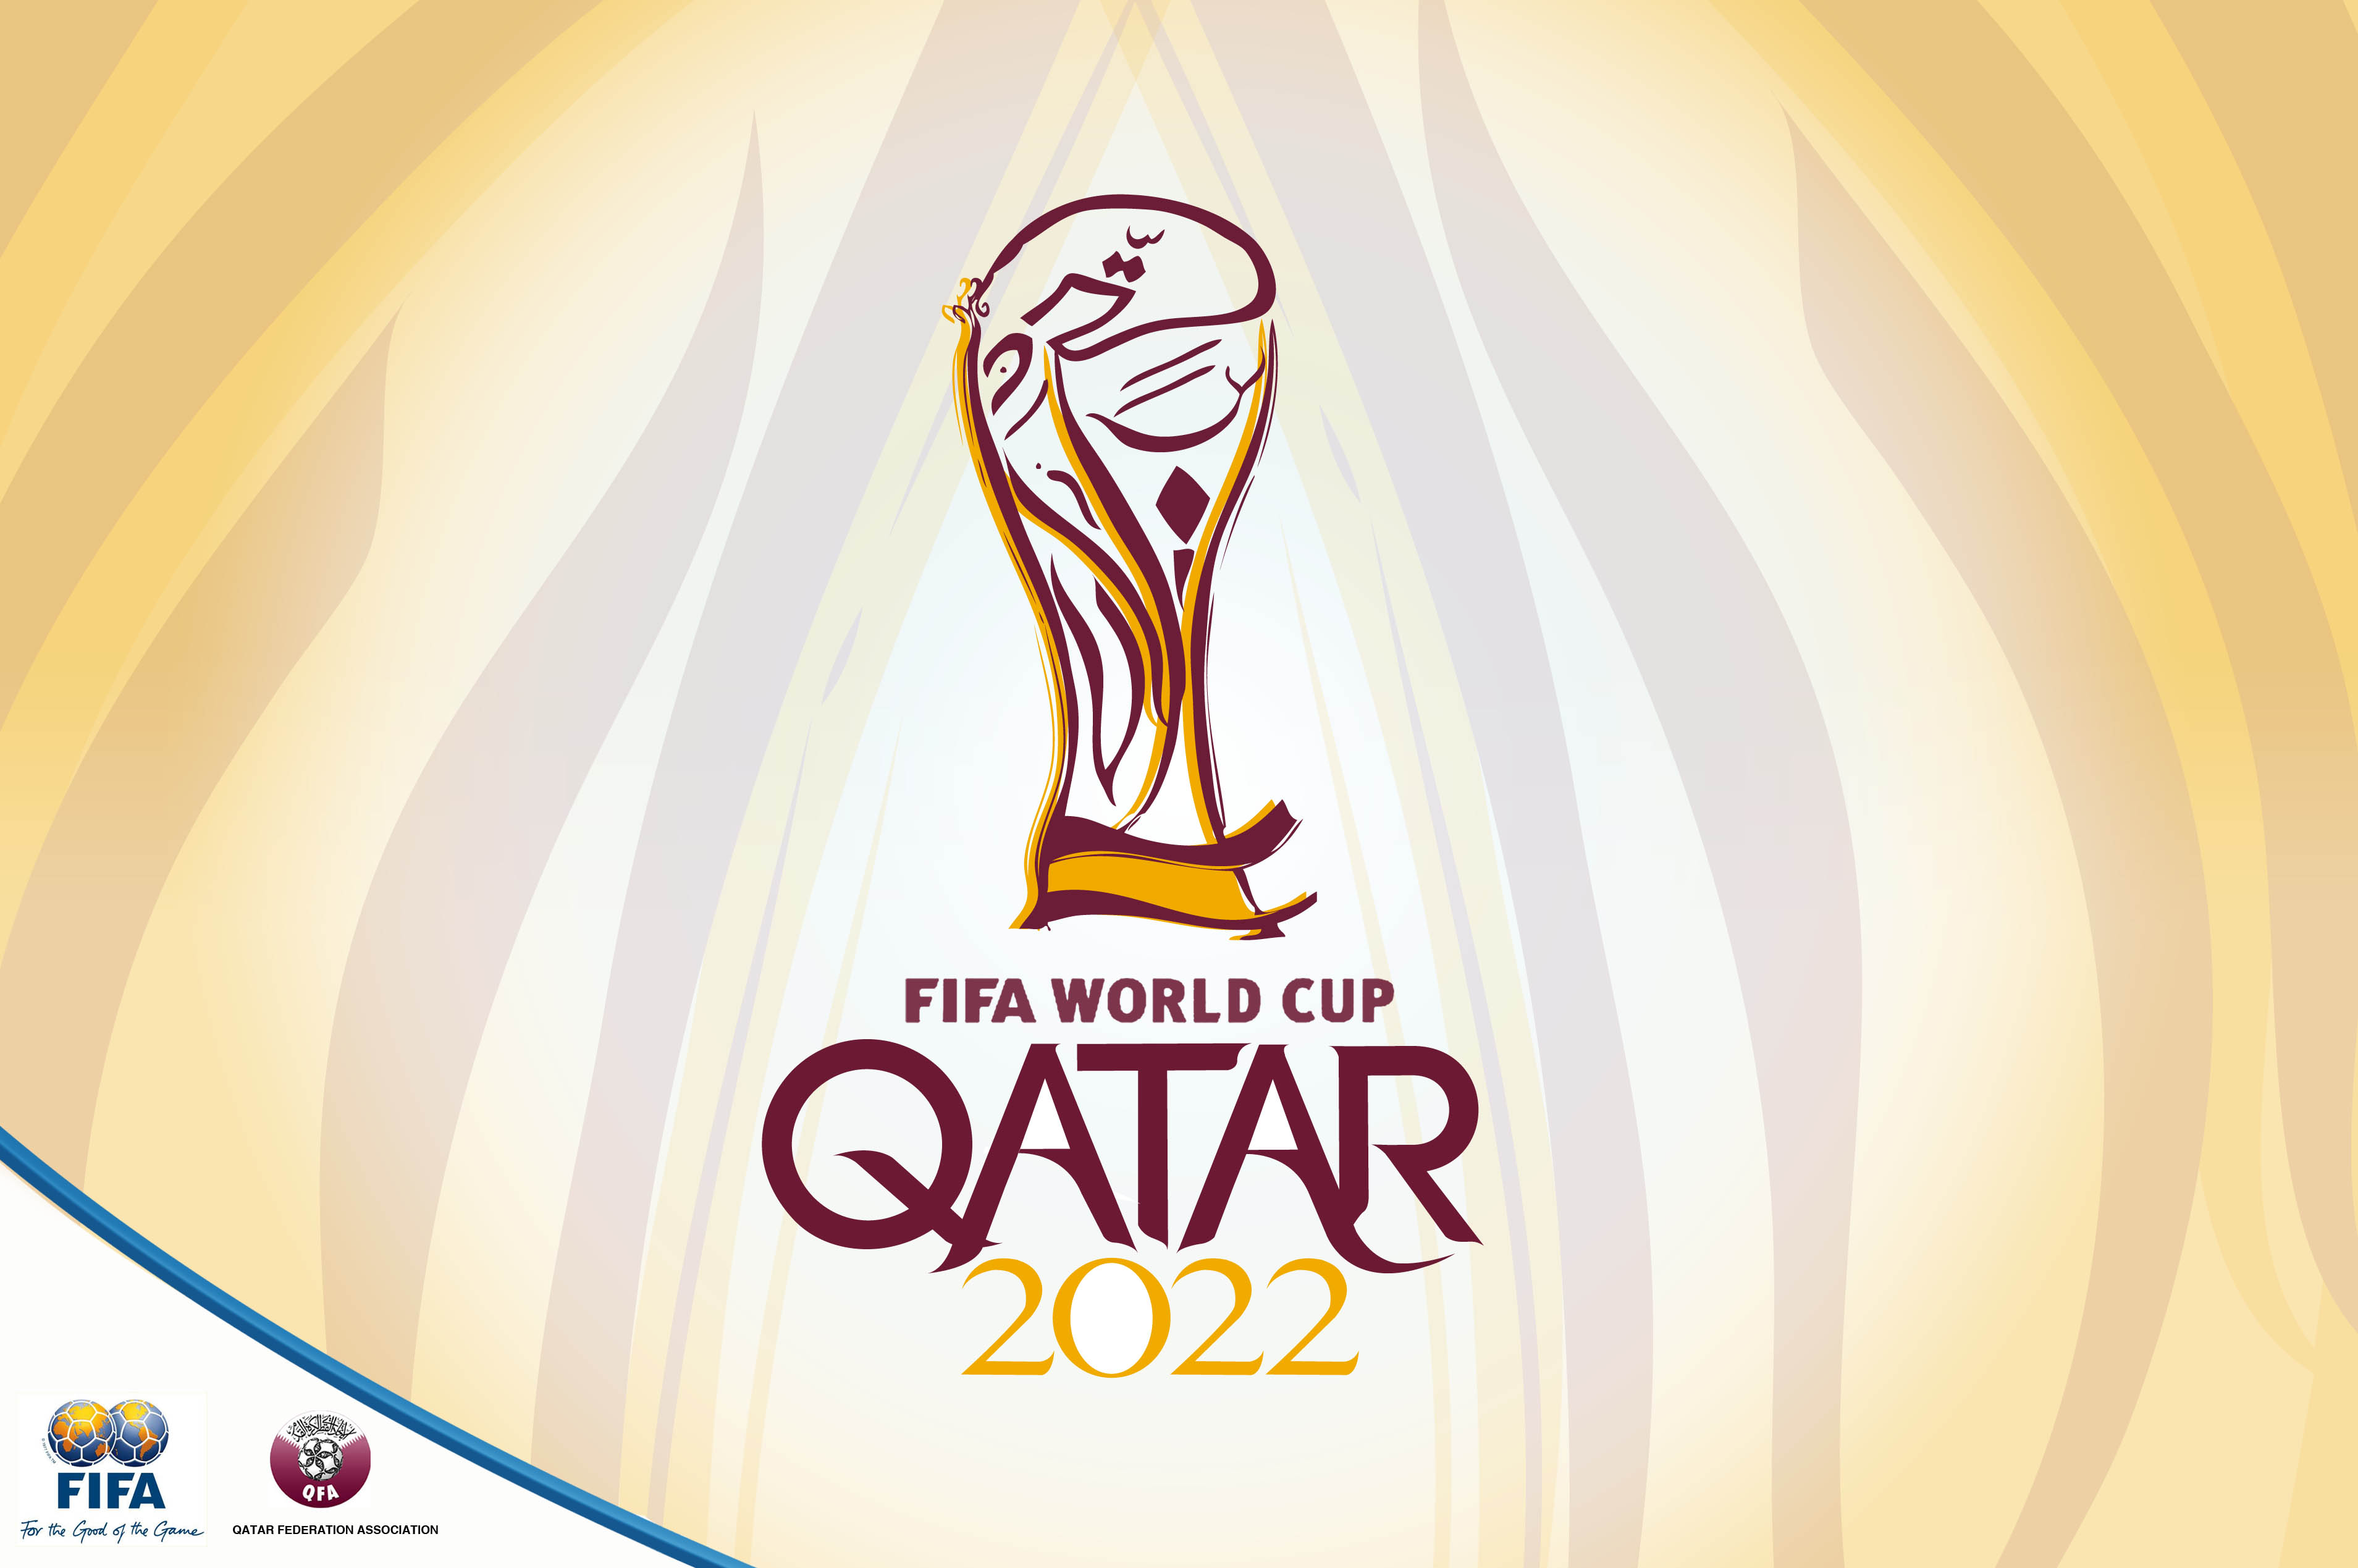 "Эта страна - база терроризма", - 6 государств потребовали от FIFA не проводить ЧМ-2022 на территории Катара